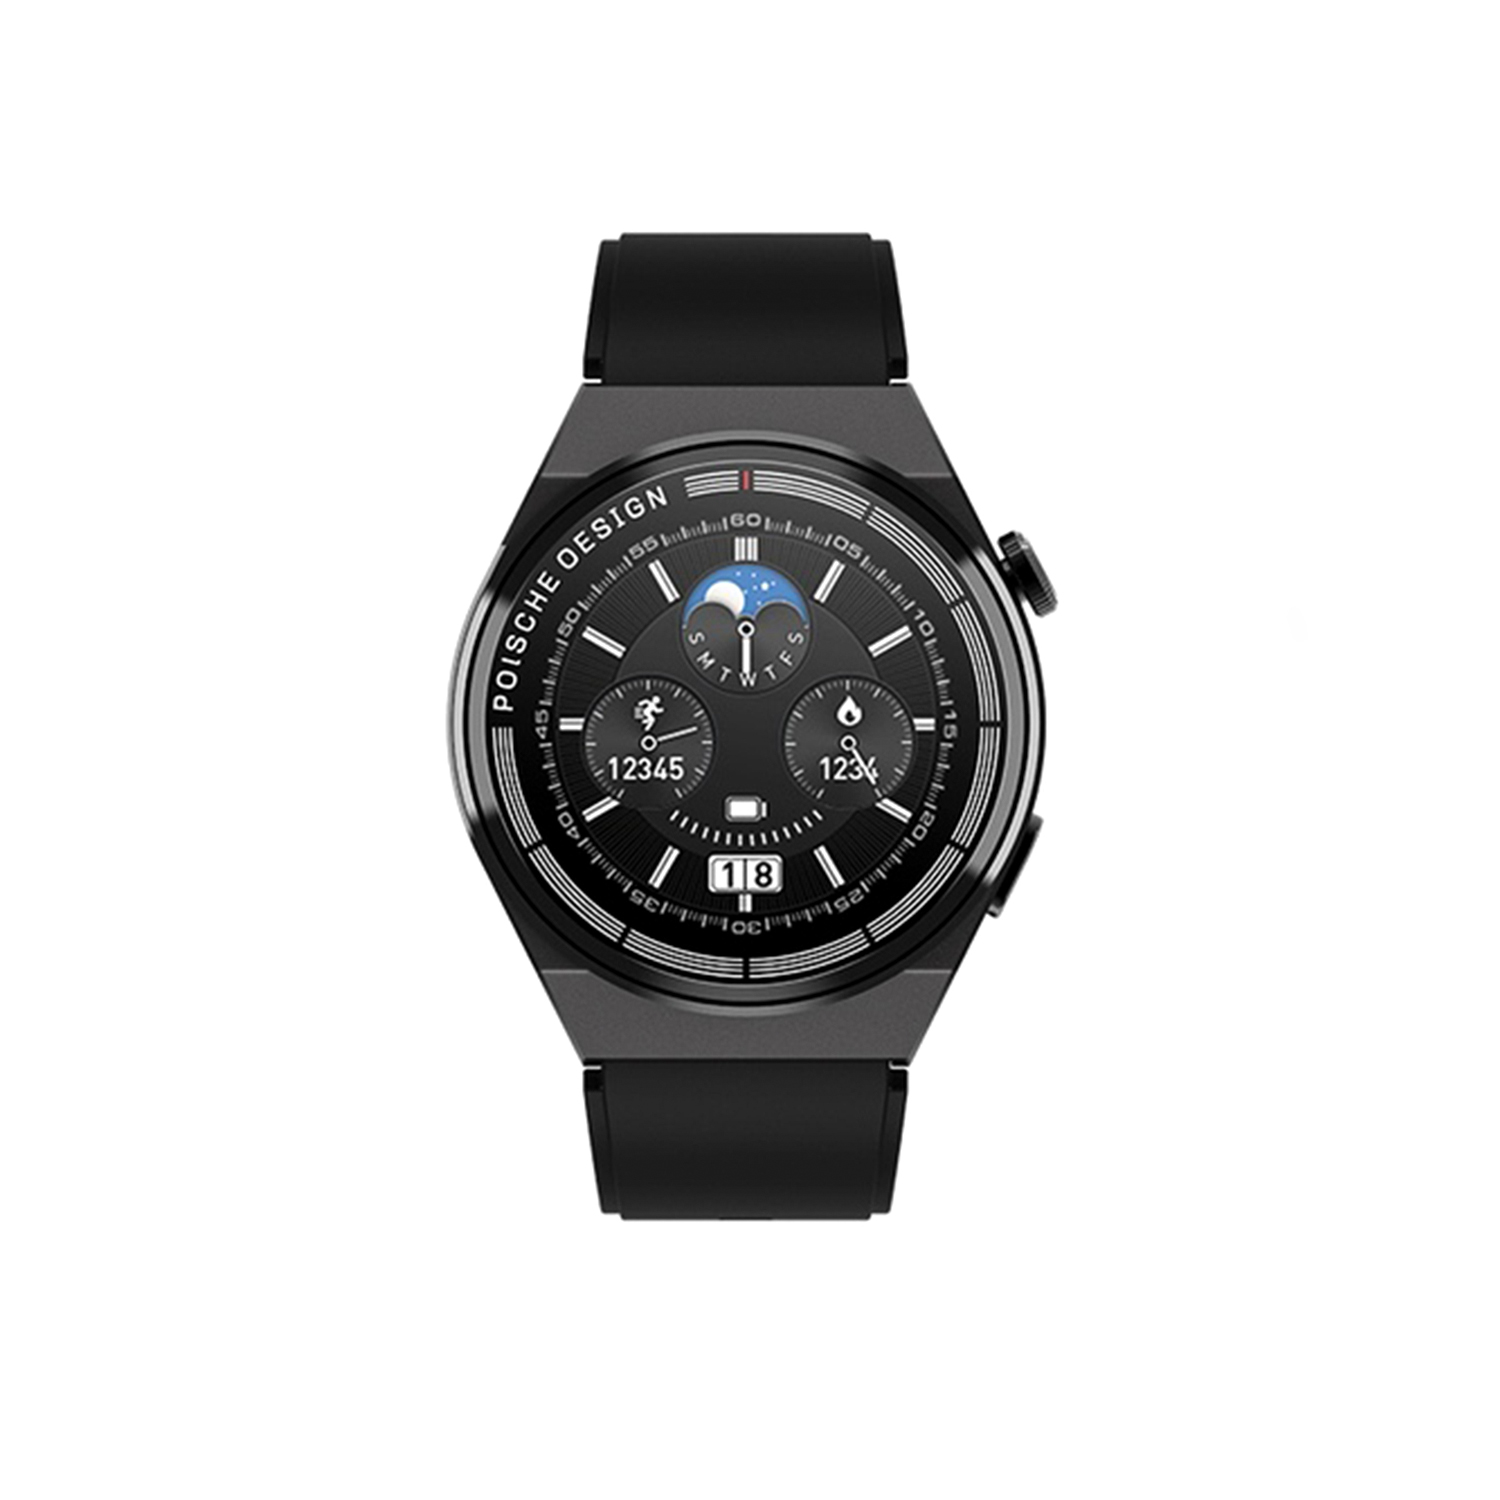 Winex 2023 Watch GT3 Max Android İos HarmonyOs Uyumlu Akıllı Saat Siyah